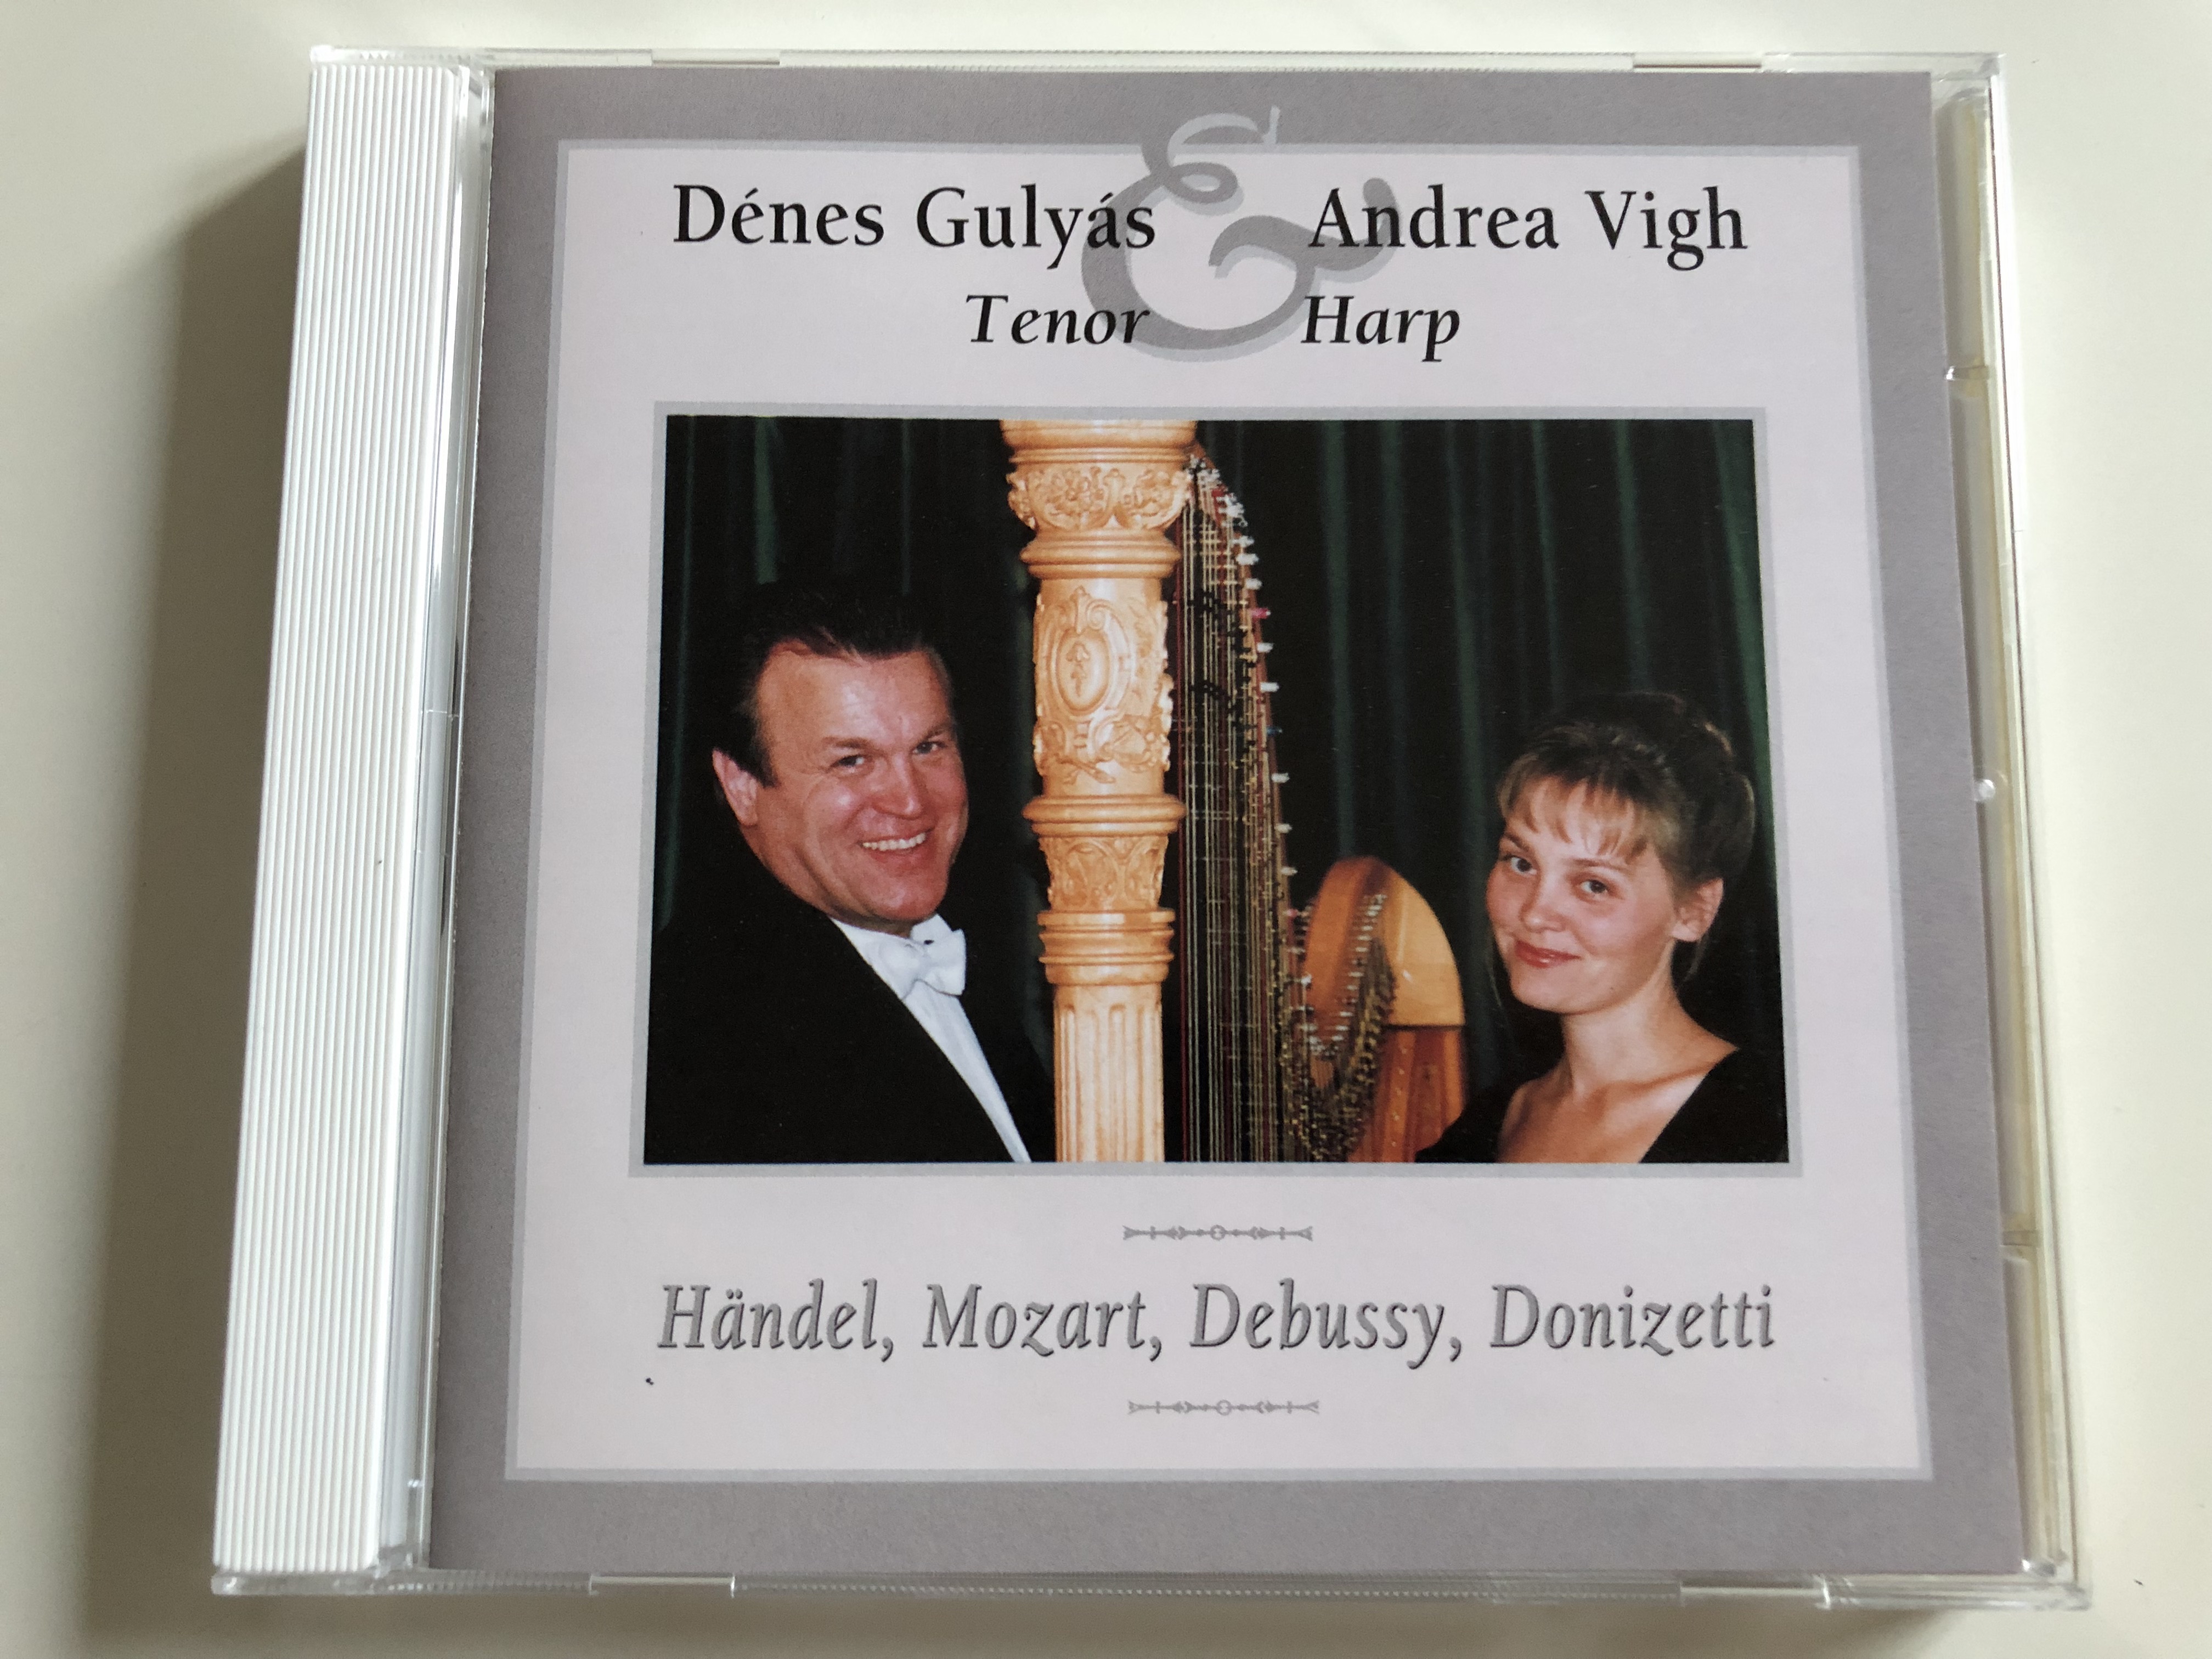 d-nes-guly-s-tenor-andrea-vigh-harp-h-ndel-mozart-debussy-donizetti-musical-director-p-terdi-p-ter-audio-cd-1998-1-.jpg